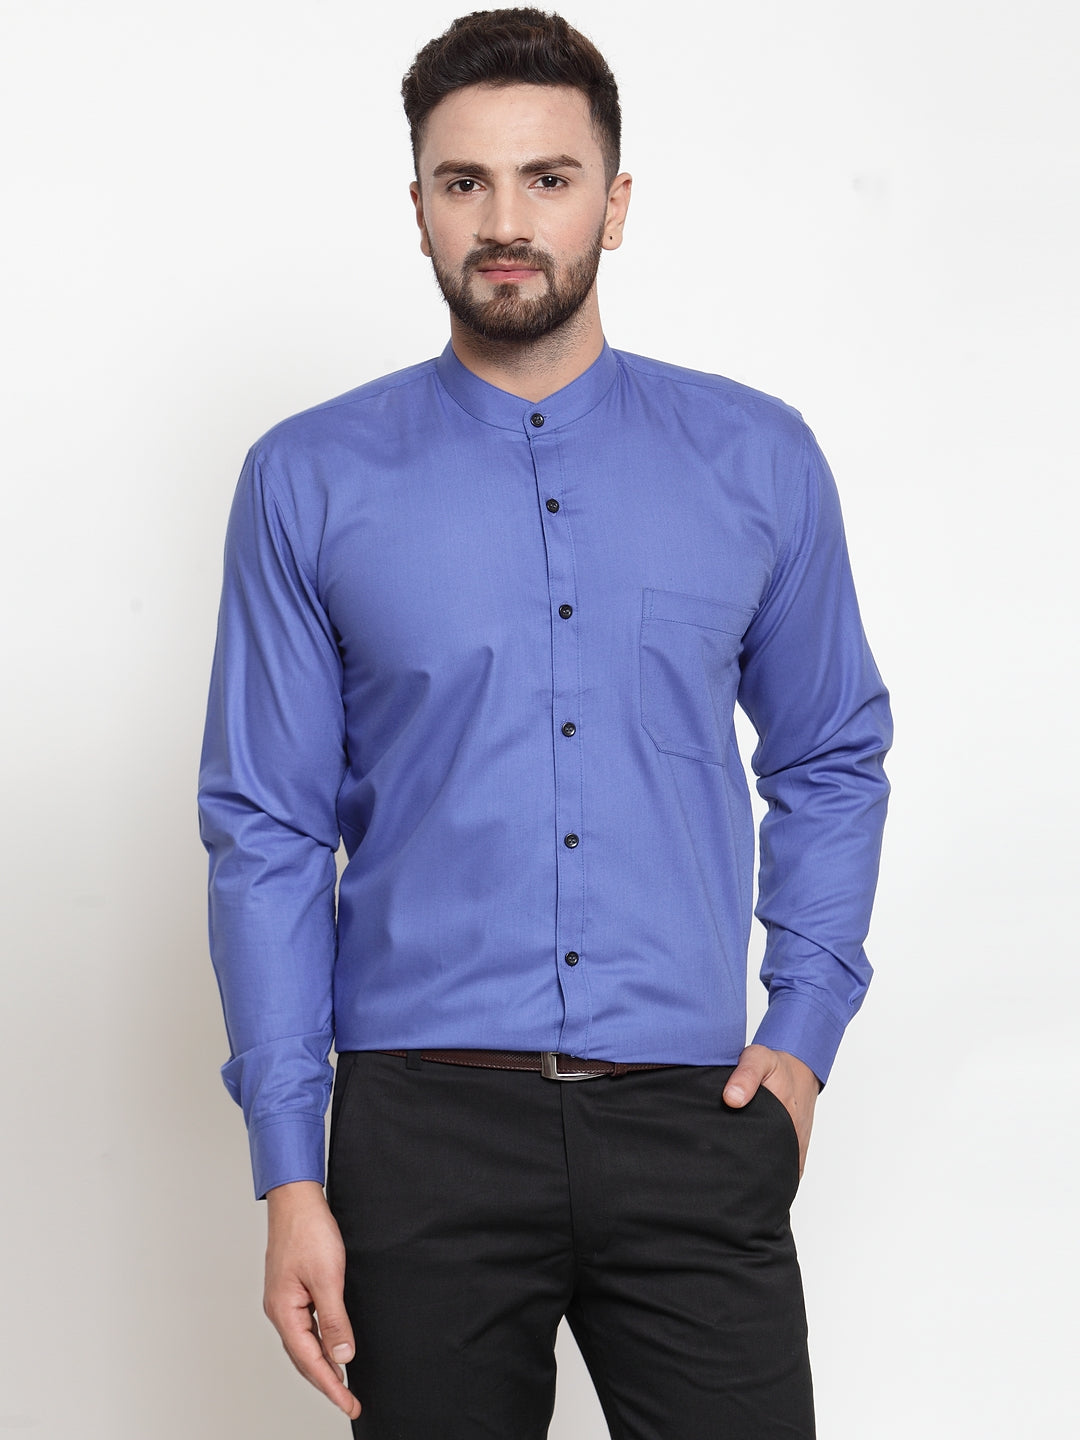 Men's Blue Cotton Solid Mandarin Collar Formal Shirts ( SF 726Royal-Blue ) - Jainish